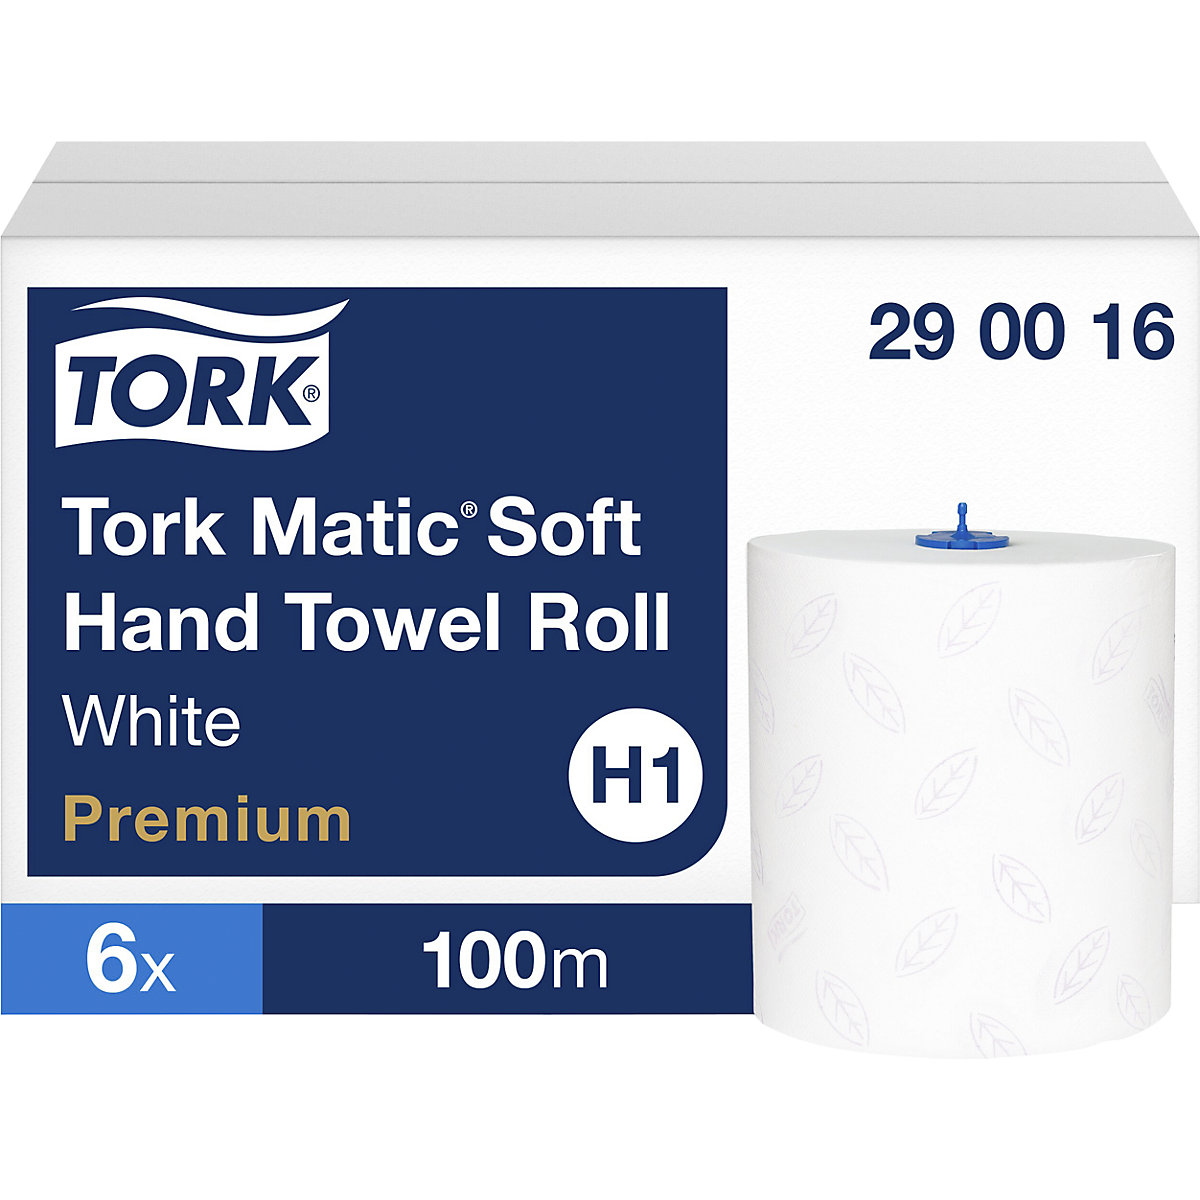 Asciugamani a rotolo Soft Tork Matic® - TORK